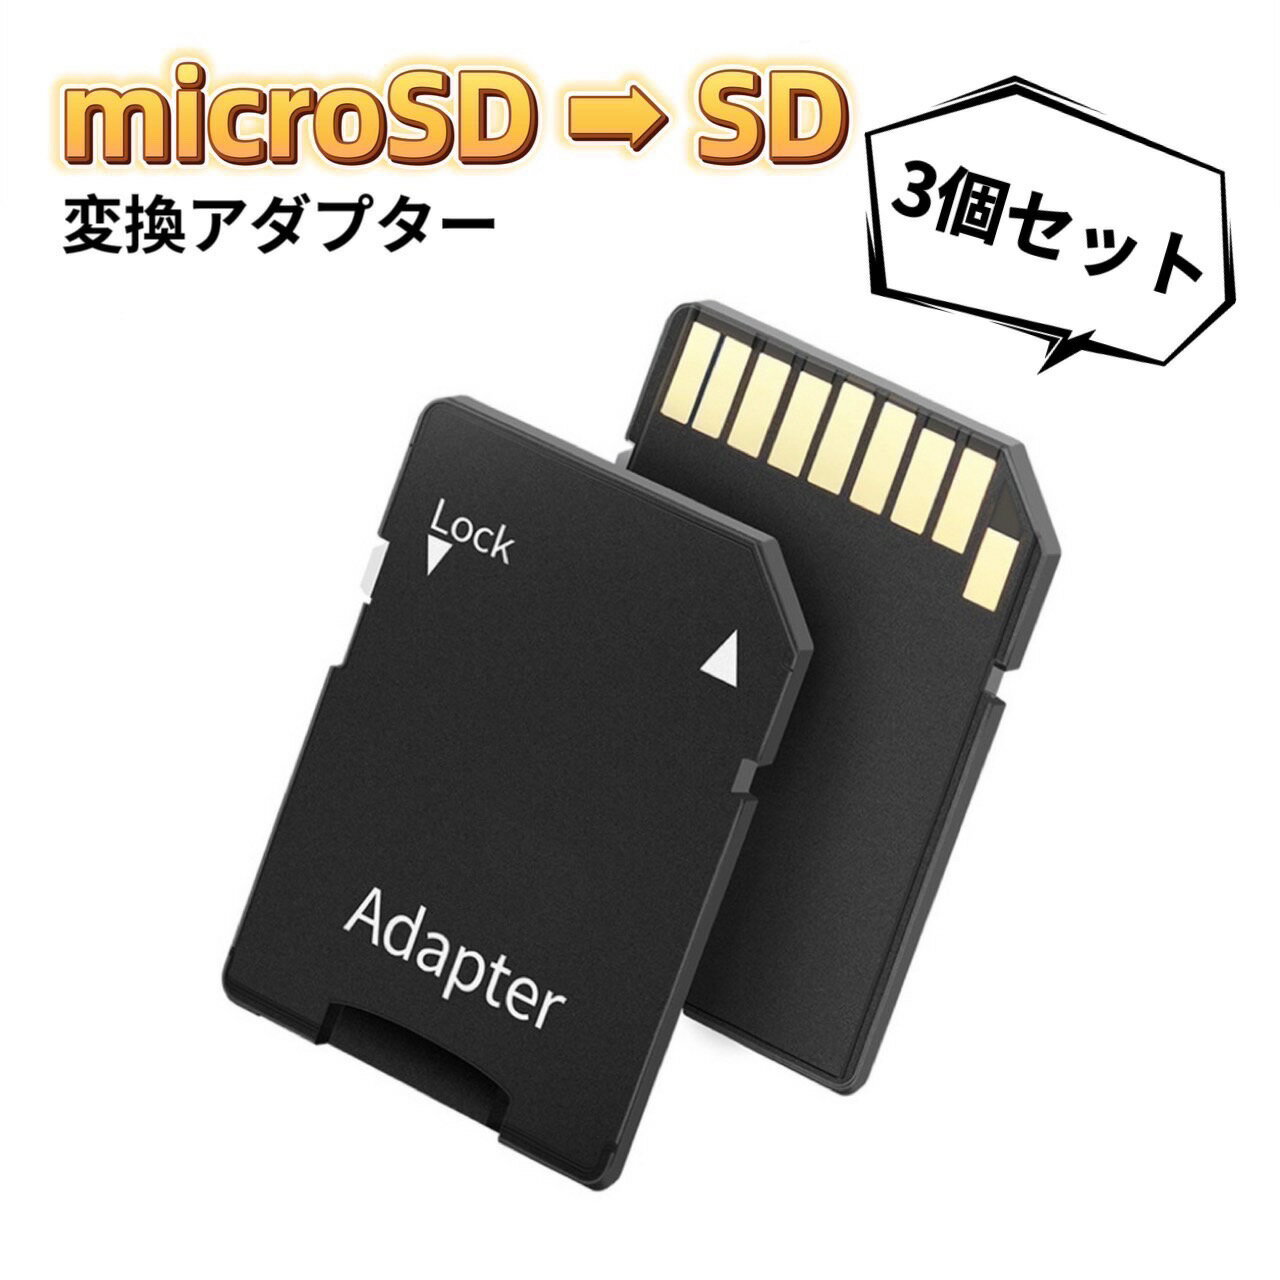 microSD/microSDHCカード/microSDXCカード TO SDカード 変換アダプタ　microSD→SD変換アダプター　microsd sd 変換 SDカード 変換アダプター microsd to sd マイクロsd 変換 コネクタ 書込み防止機能付き 転送 通信 動画 撮影